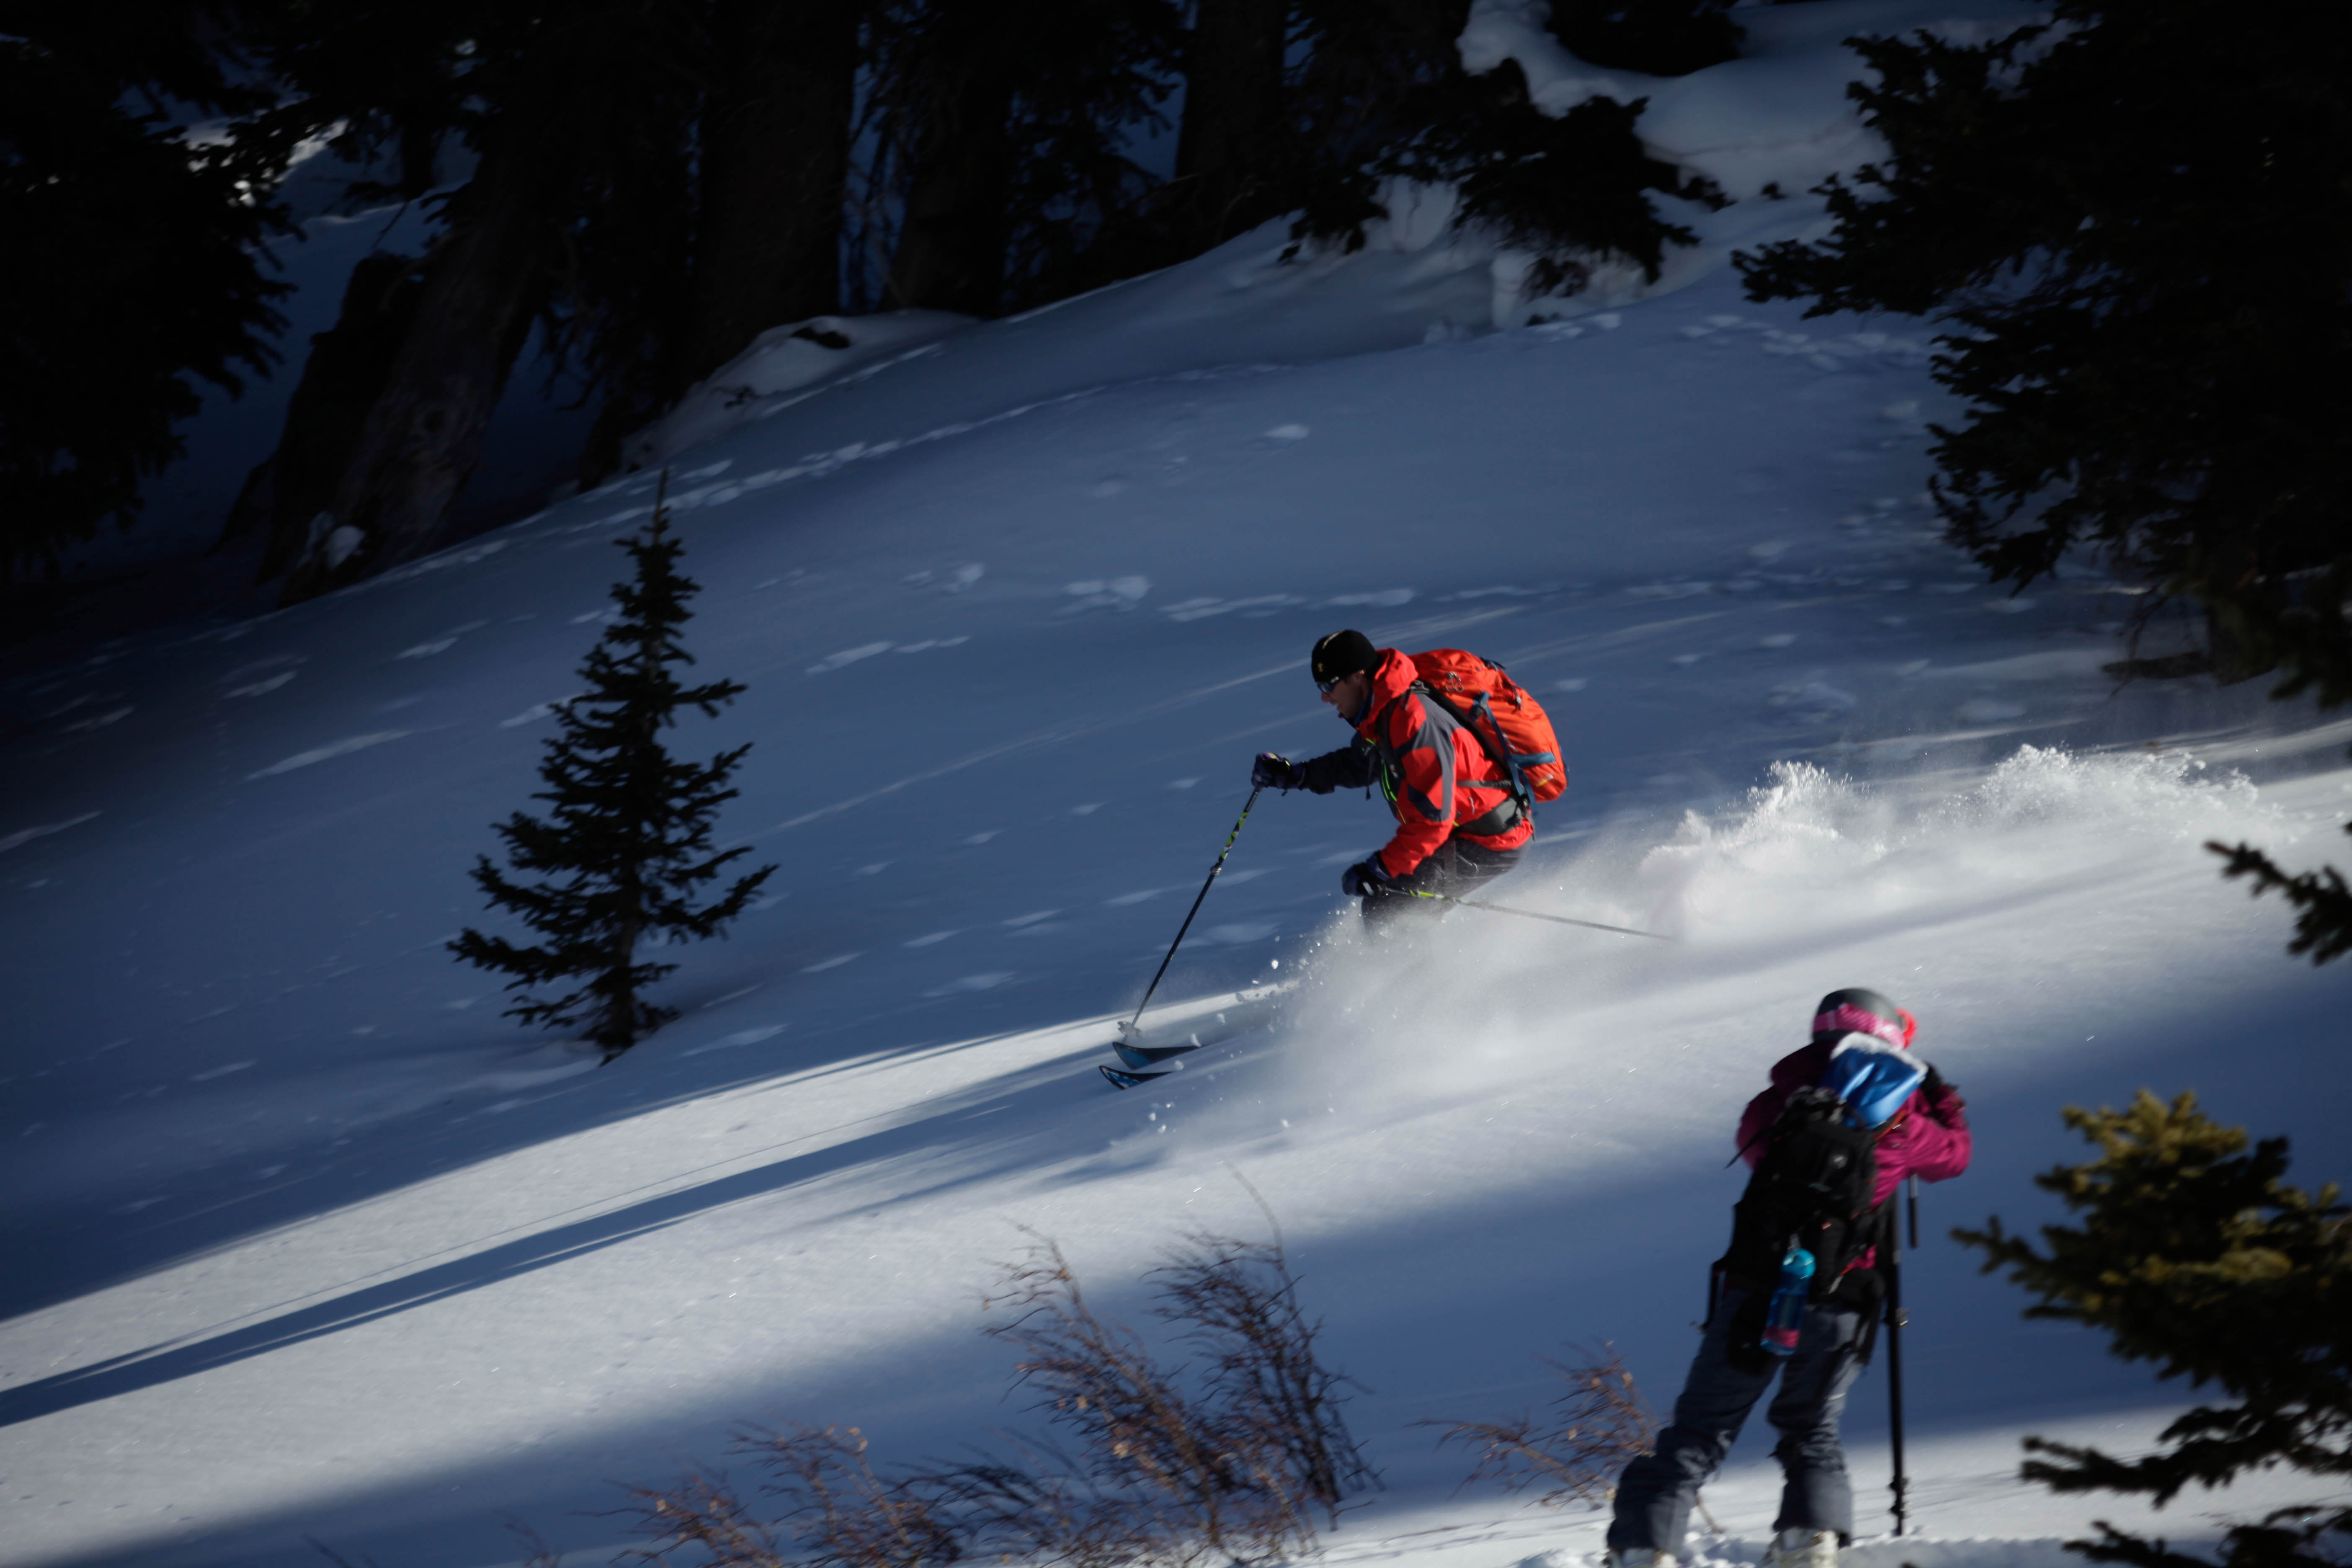 Alpine skier Chris Davenport takes some powder turns for Adventure Film School students in Vail Colorado